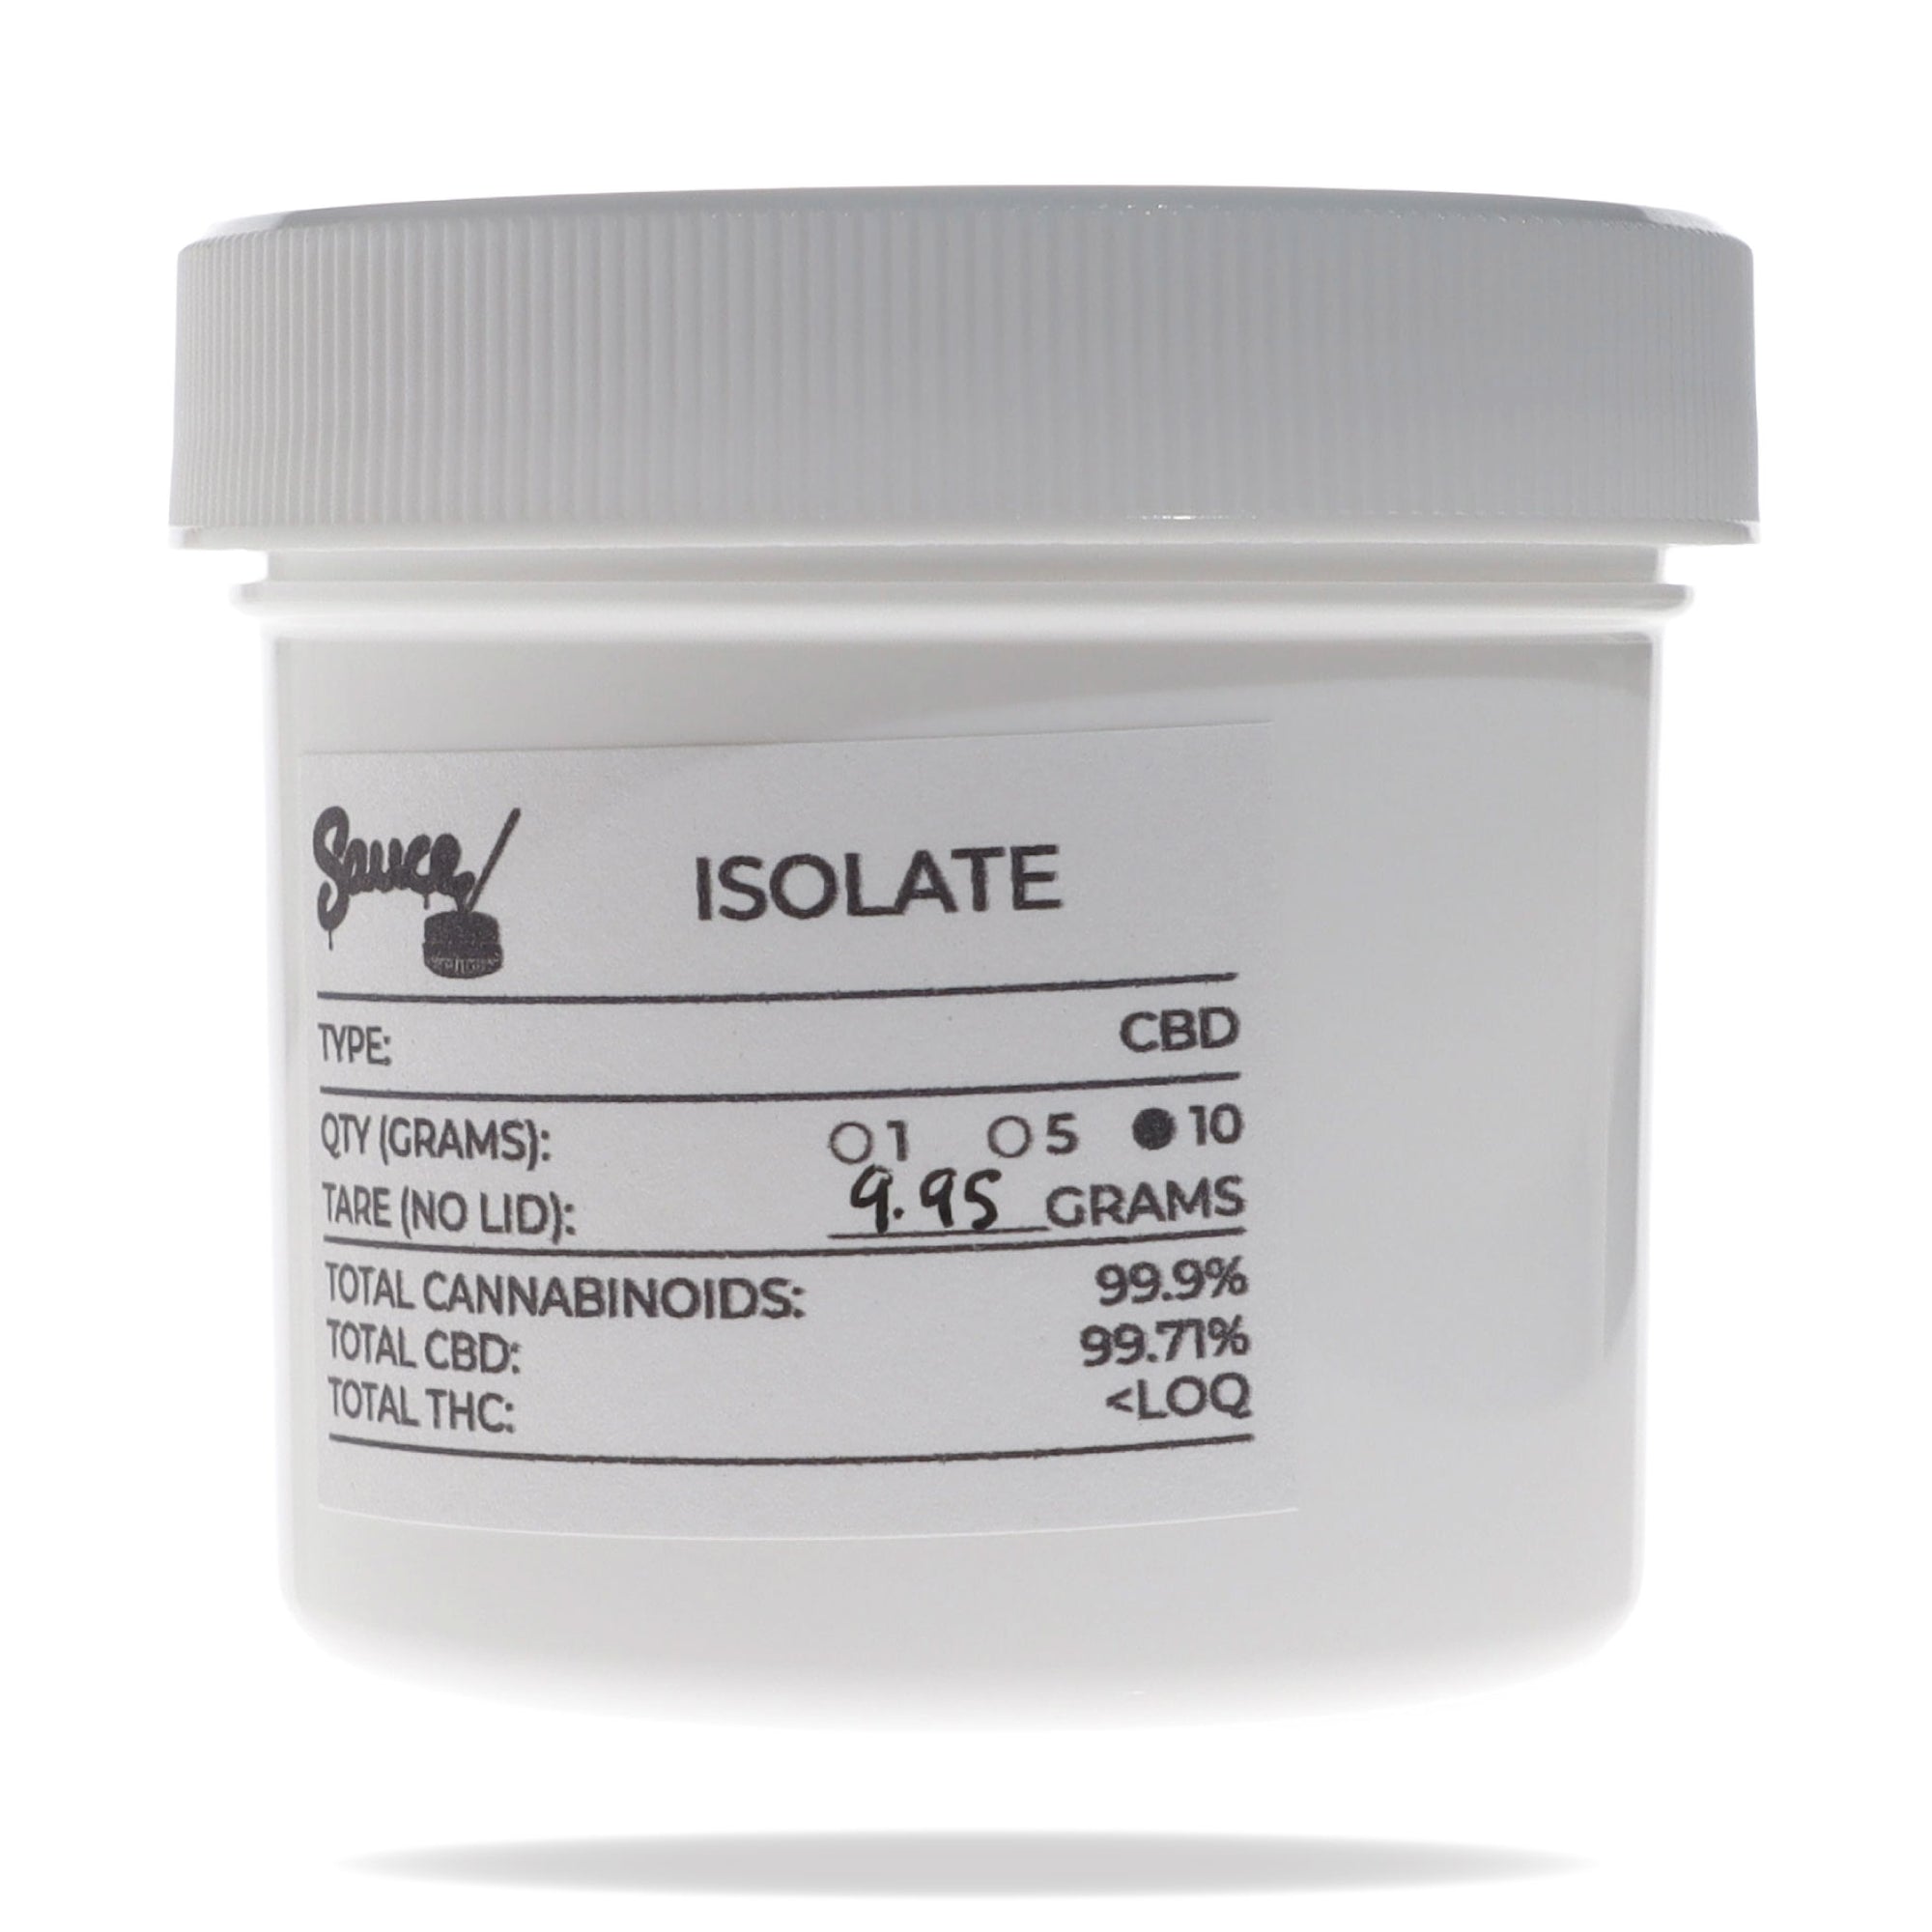 Image of CBD Isolate 10 gram jar.